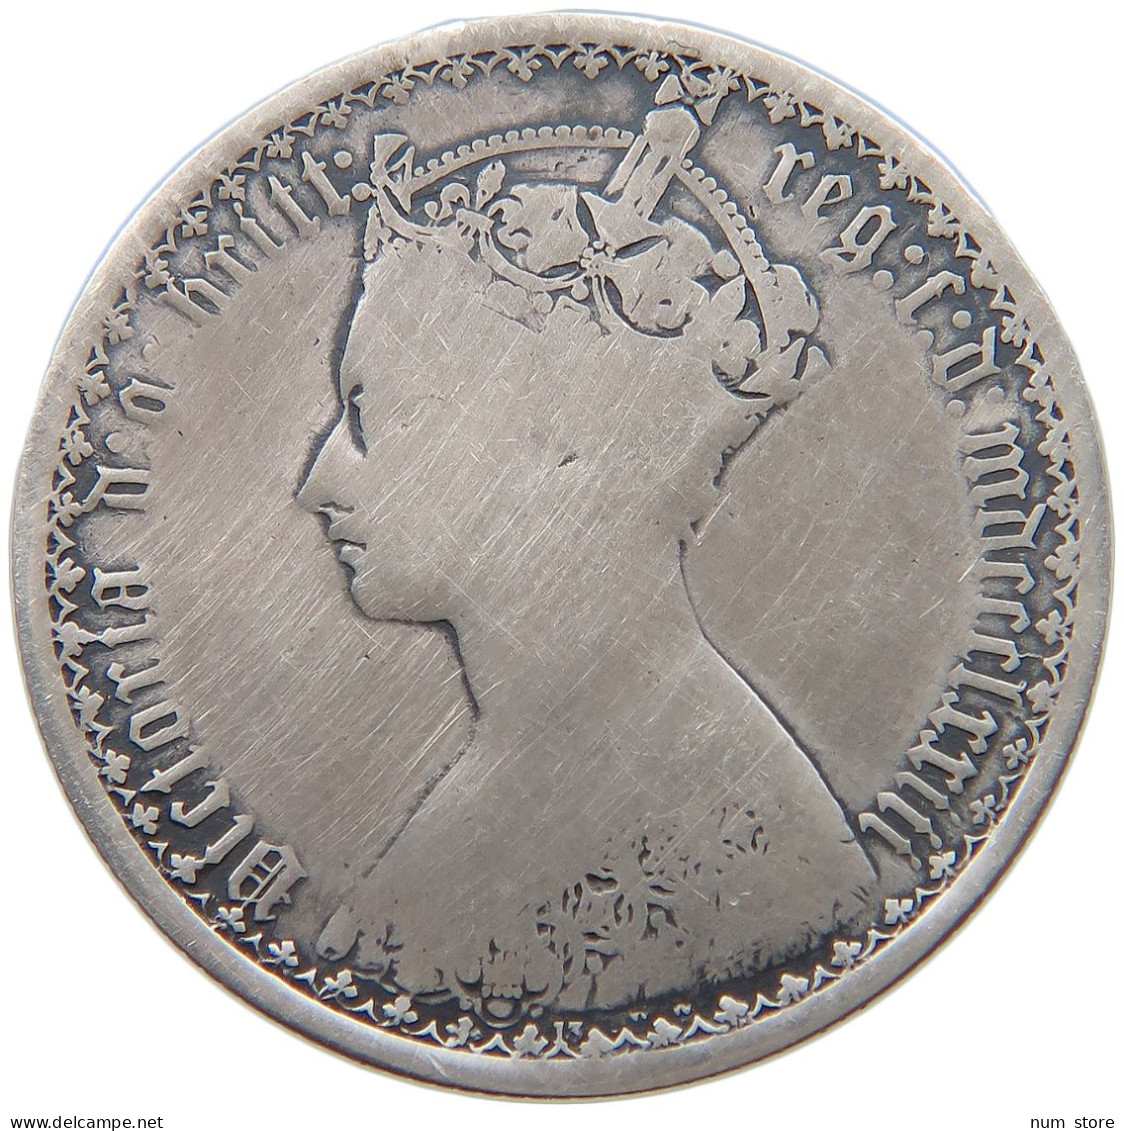 GREAT BRITAIN FLORIN 1873 Victoria 1837-1901 #t094 0249 - J. 1 Florin / 2 Shillings